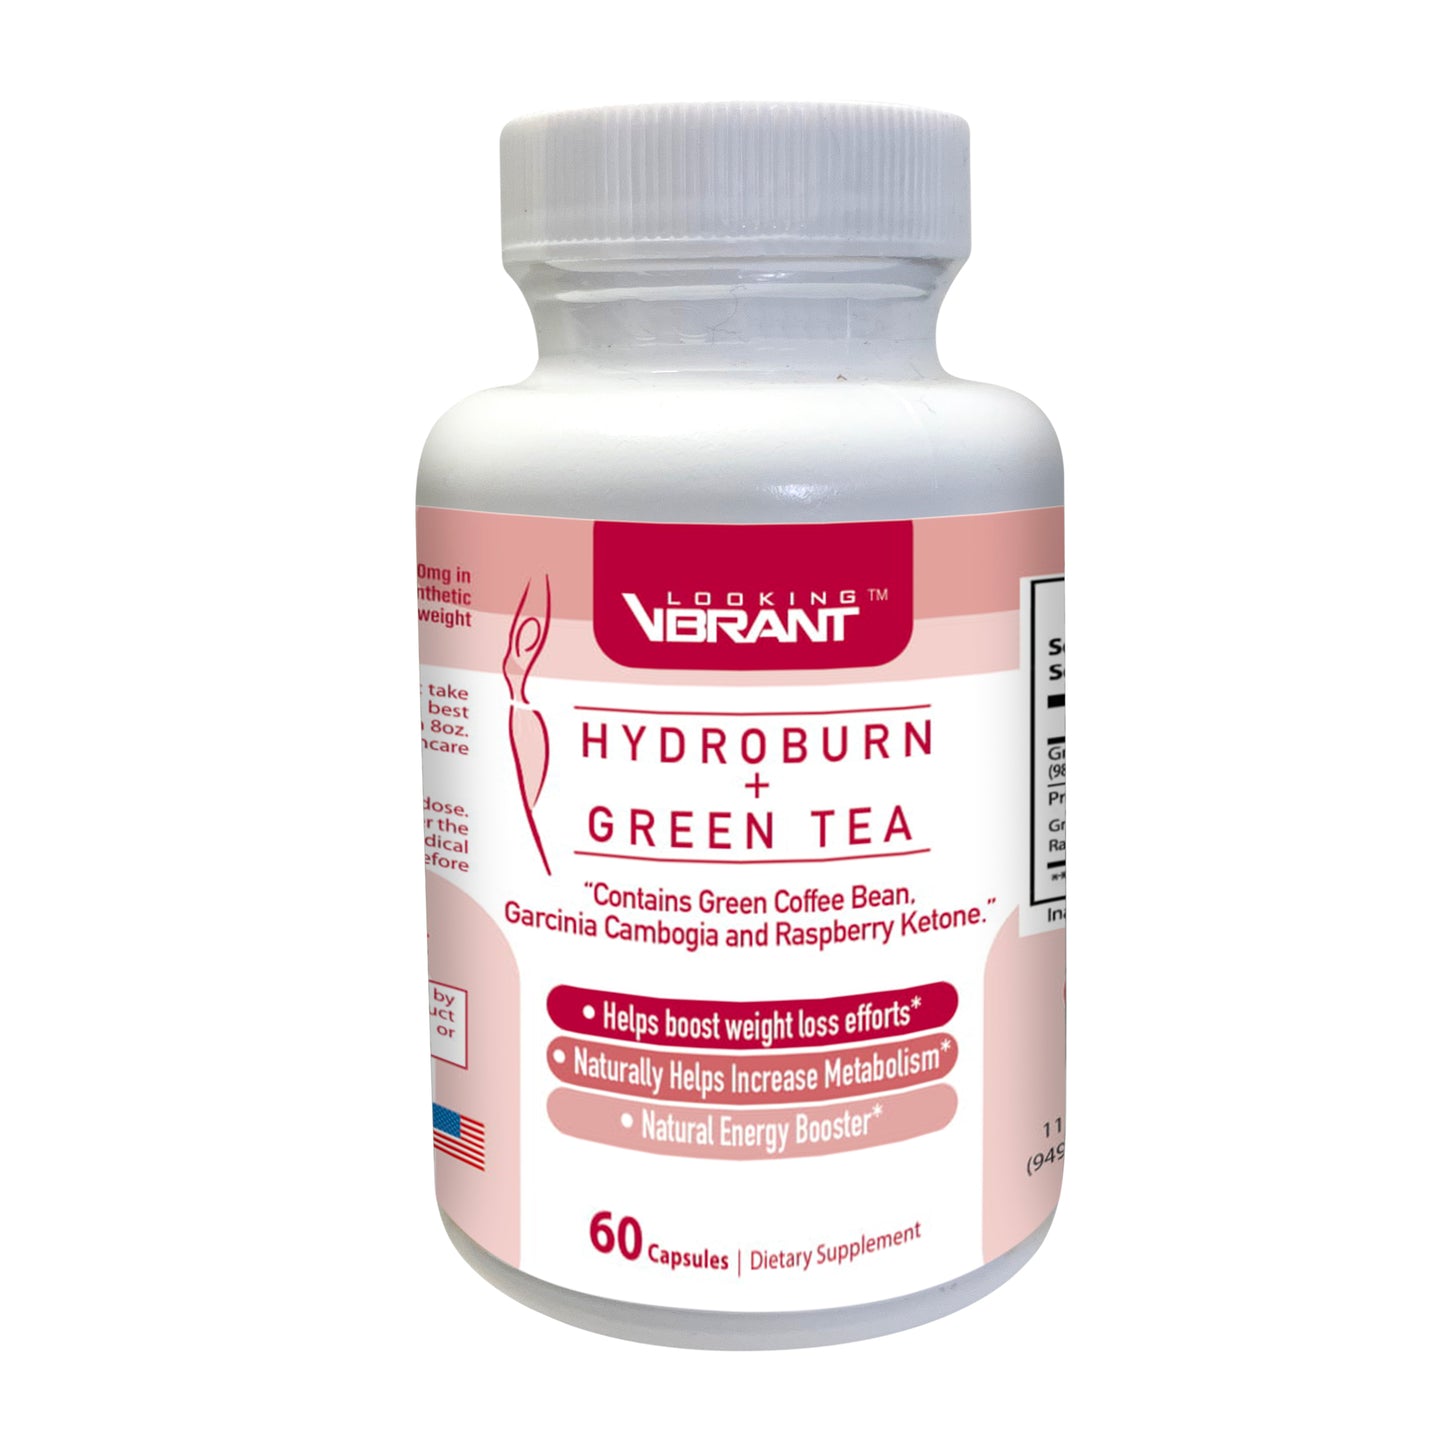 HYDROBURN+GREEN TEA (100% Natural Herbs) - lookingvibrantcom